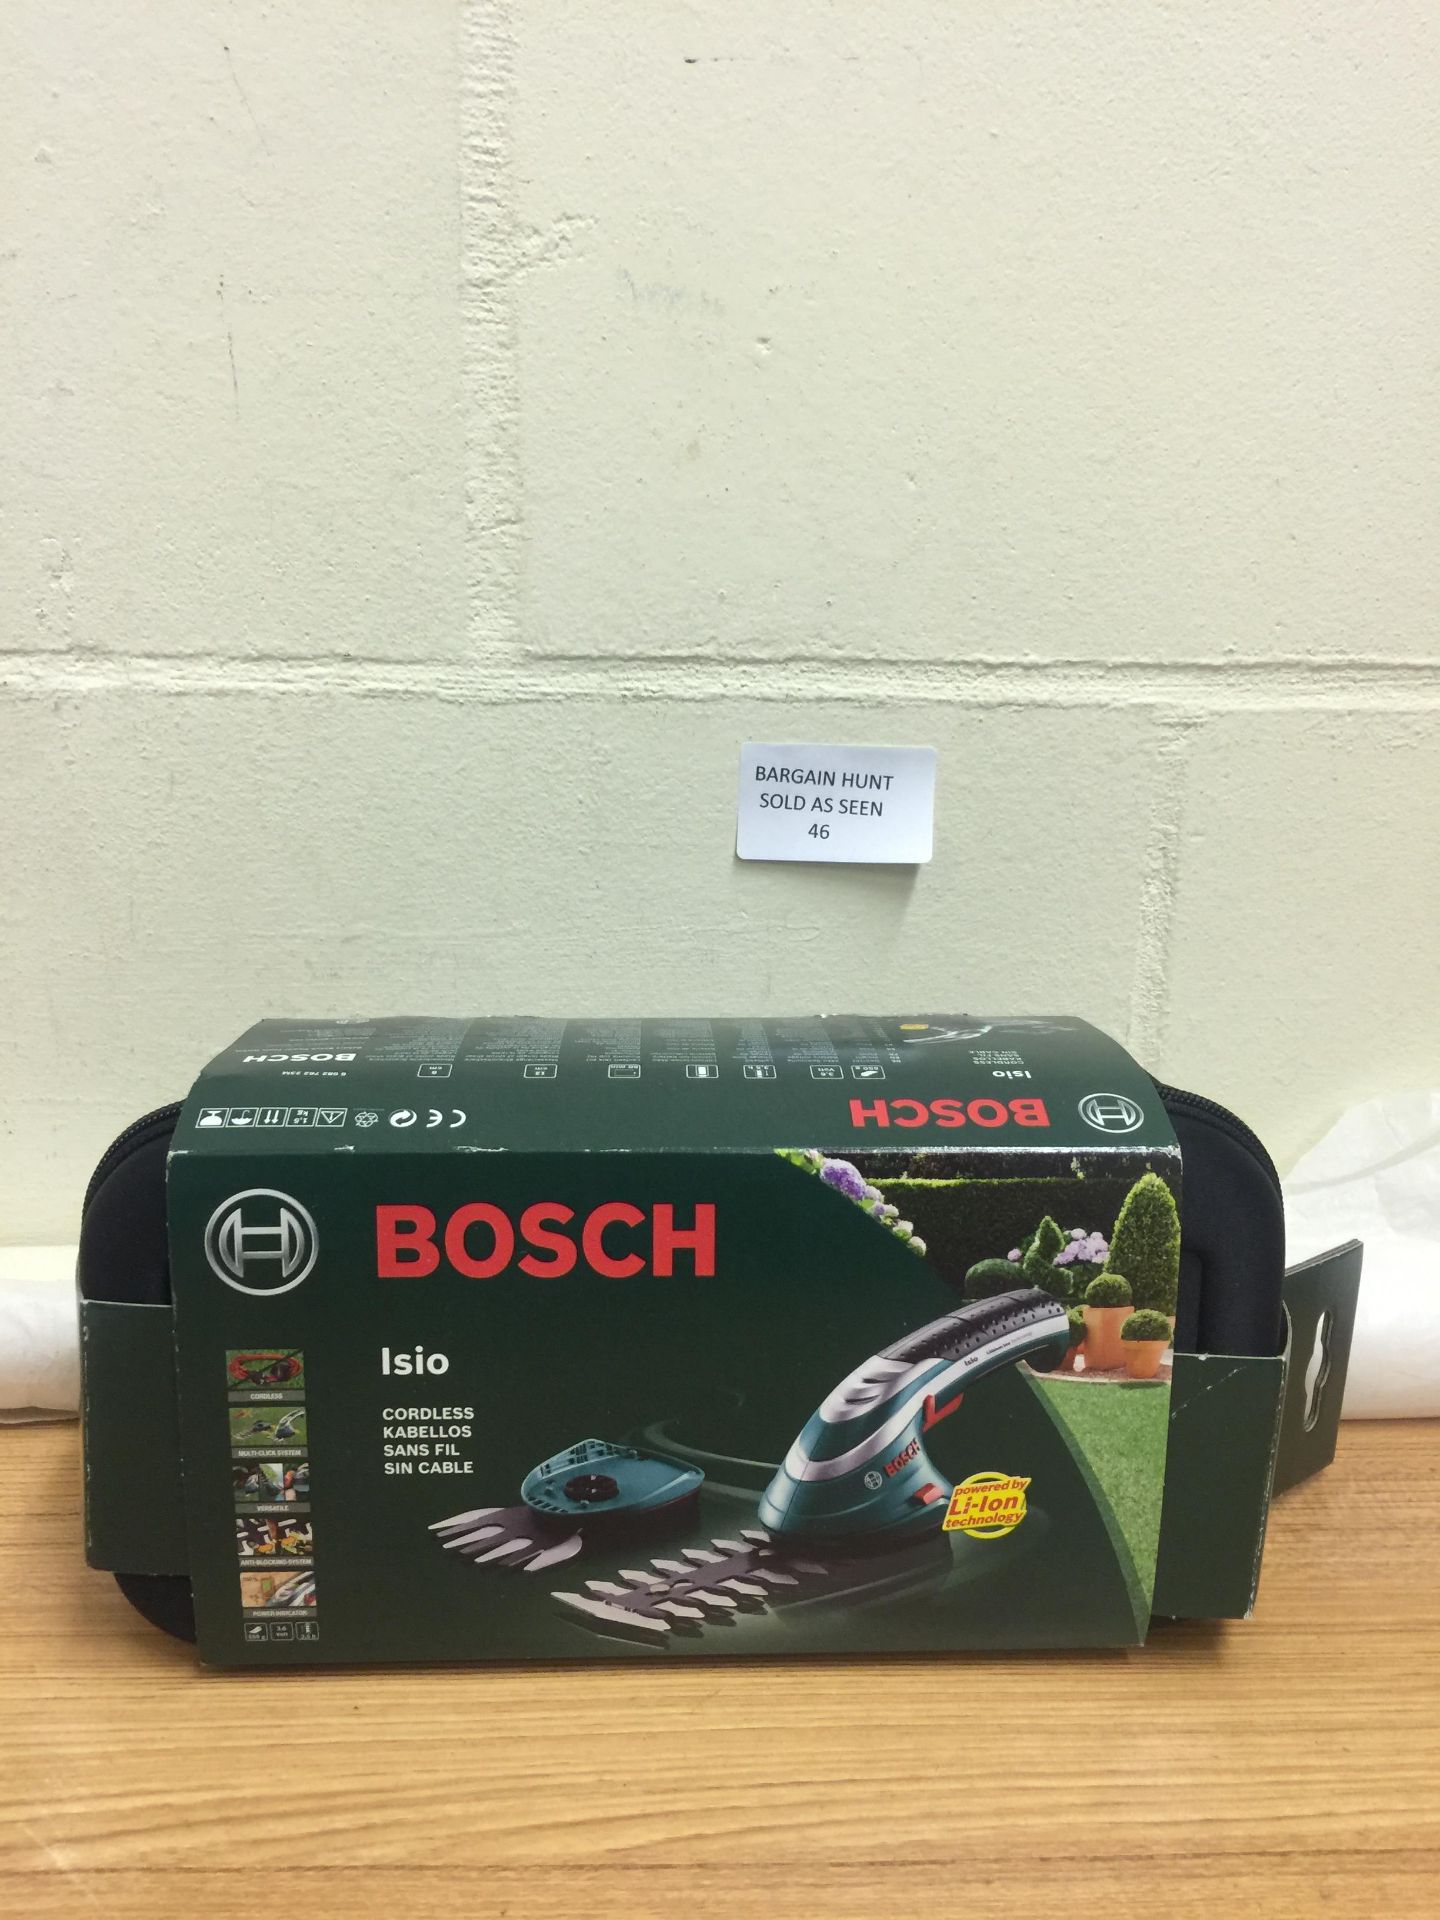 Bosch Cordless Edging and Shrub Shear Isio Set RRP £49.99